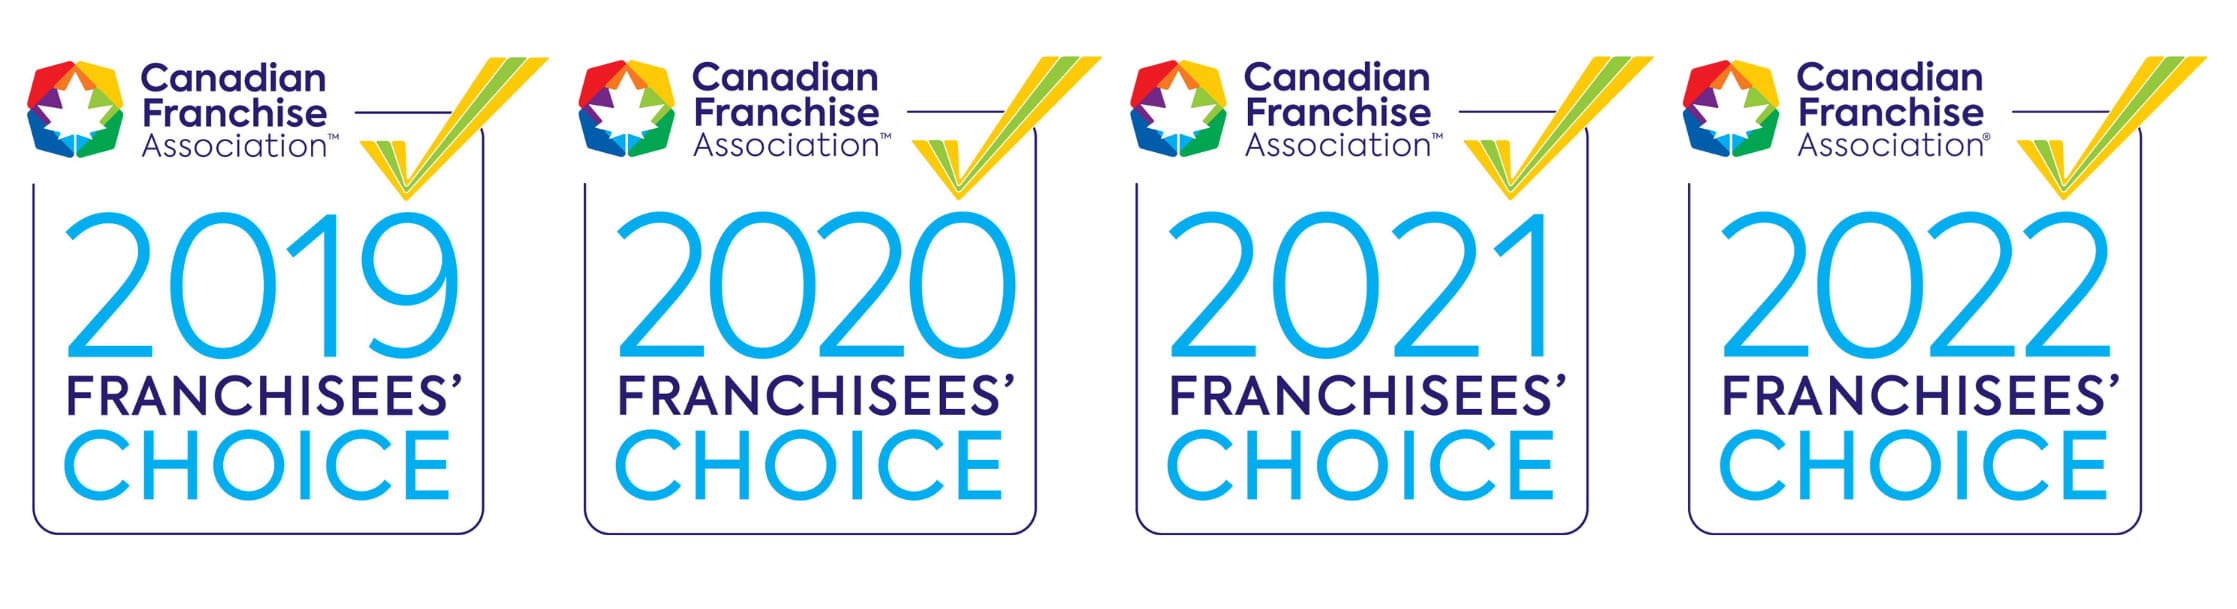 Franchisees' Choice Designation